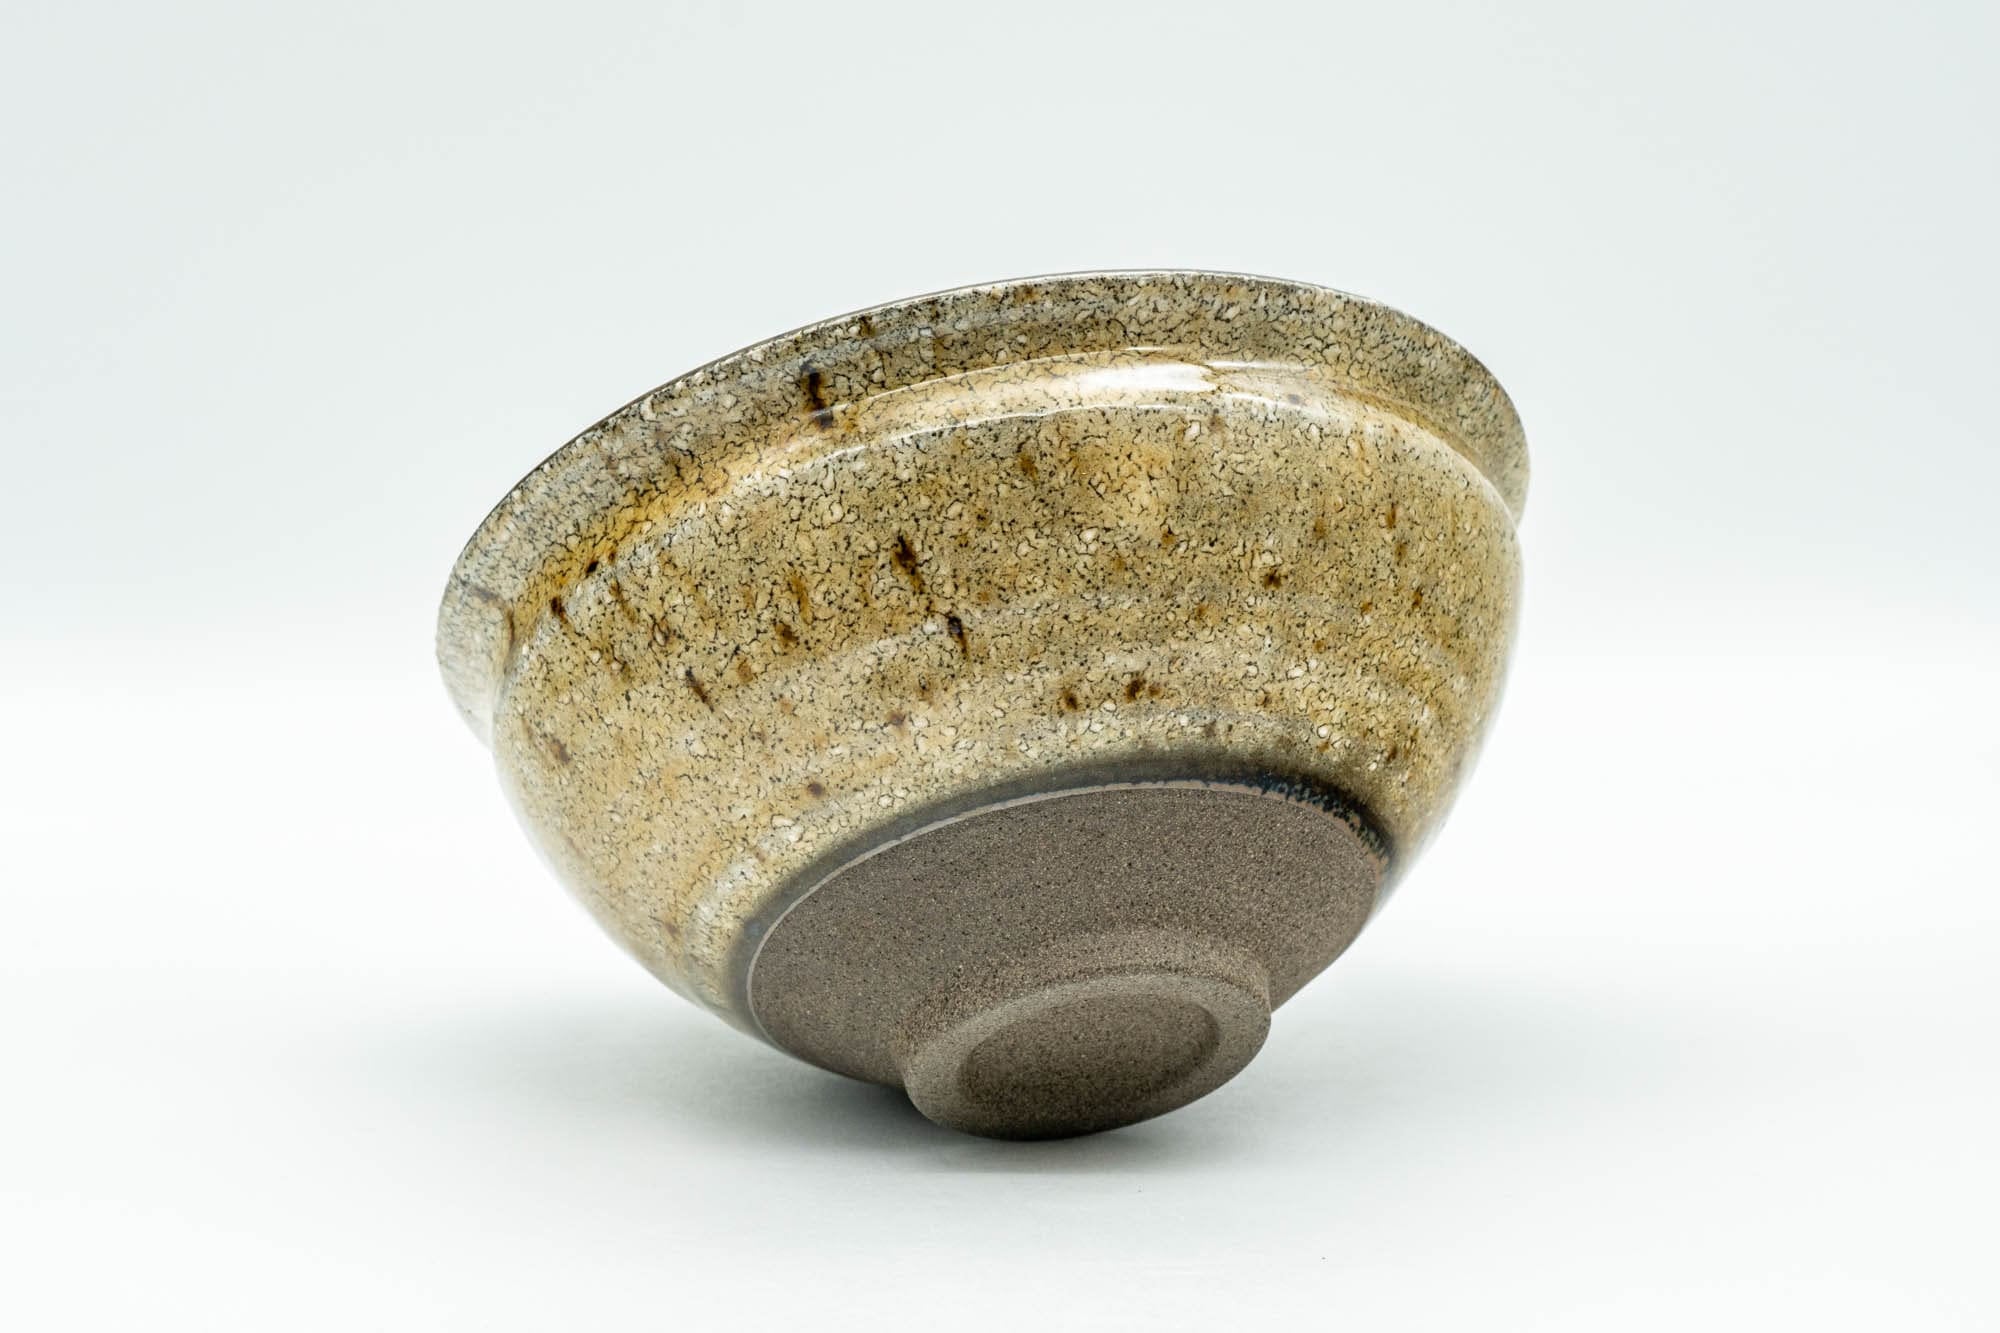 Japanese Matcha Bowl - Textured Glaze Tenmoku-gata Chawan - 300ml